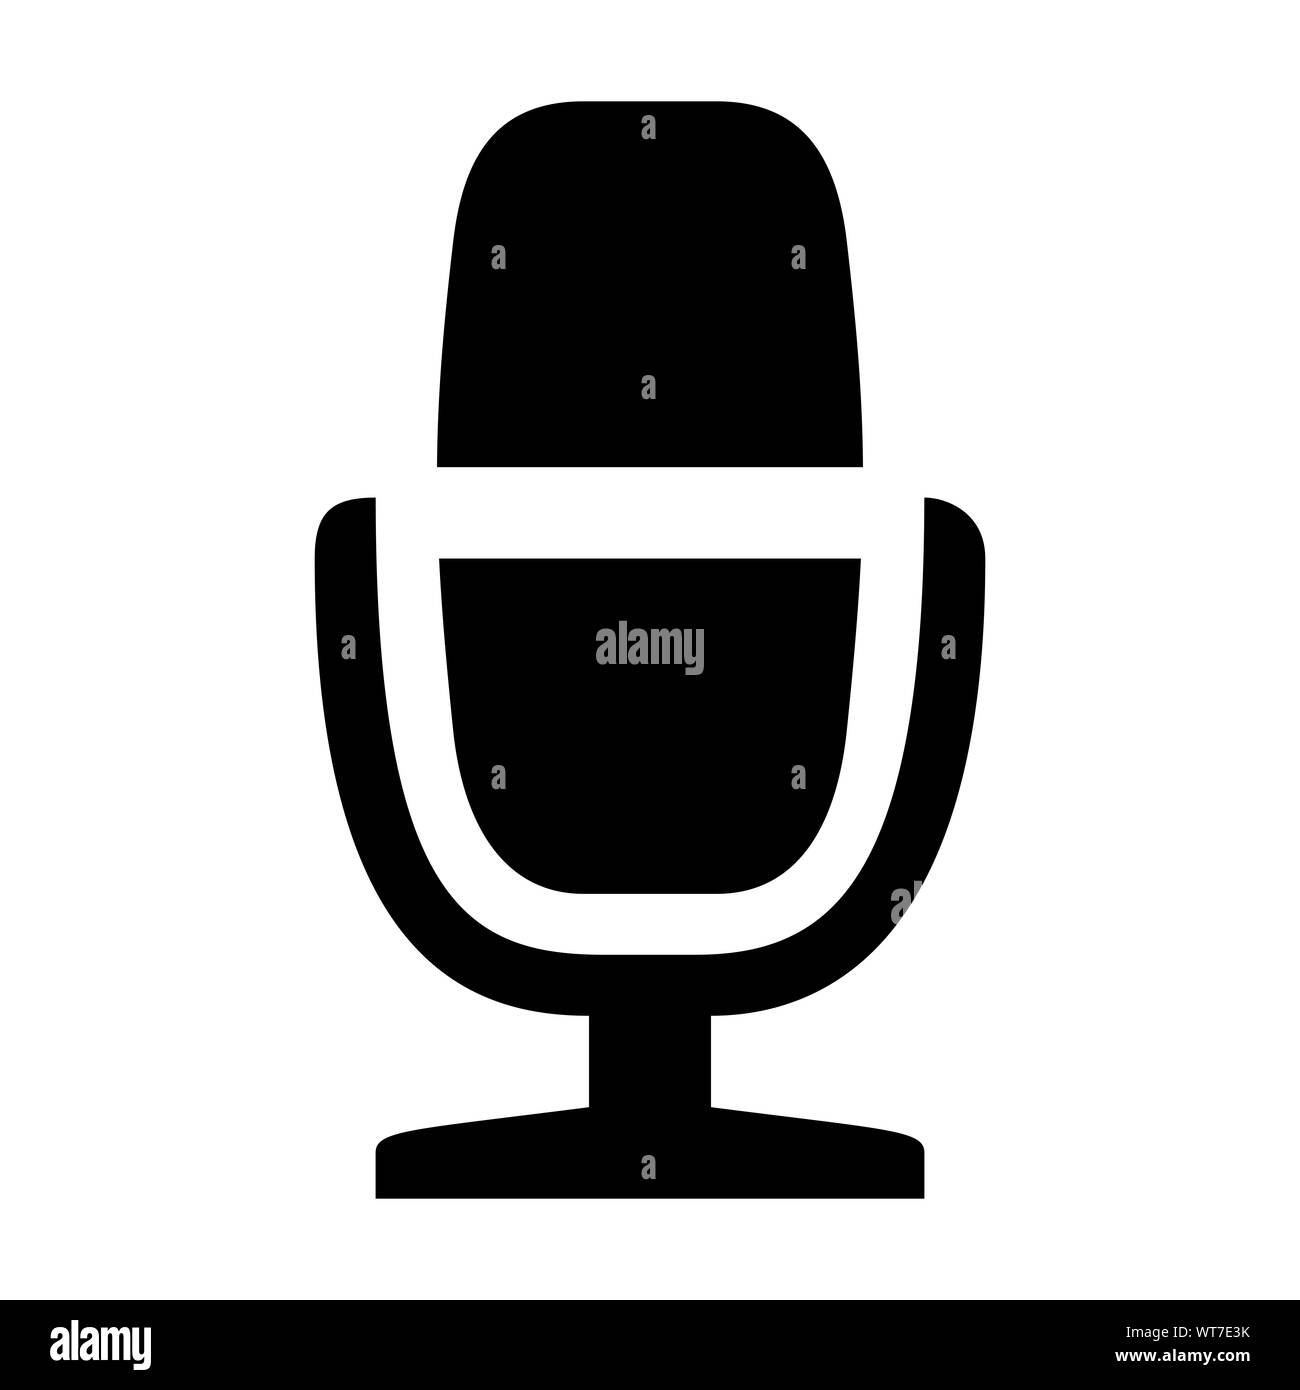 Old- fashioned radio microphone icon vector illustration - Sign,symbol,icon,logo etc. Stock Photo